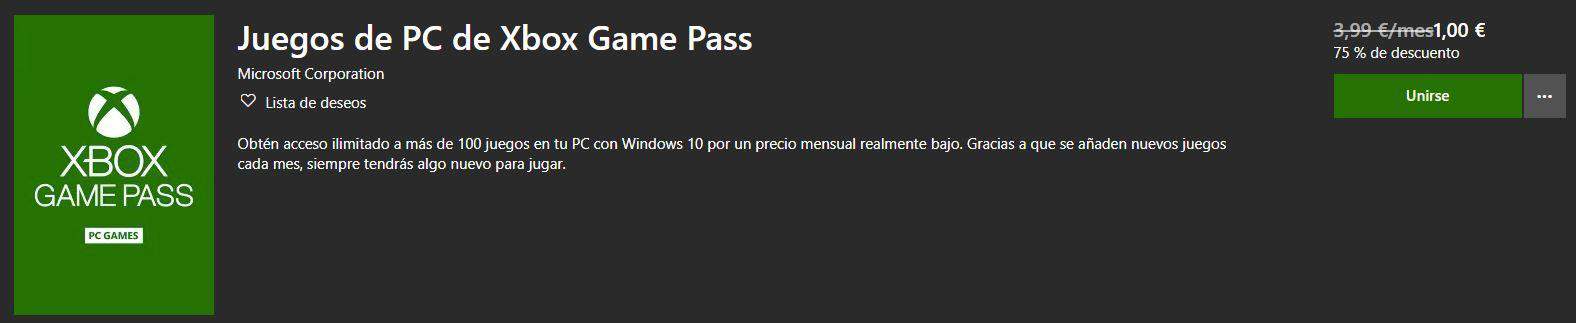 Xbox Game Pass pc